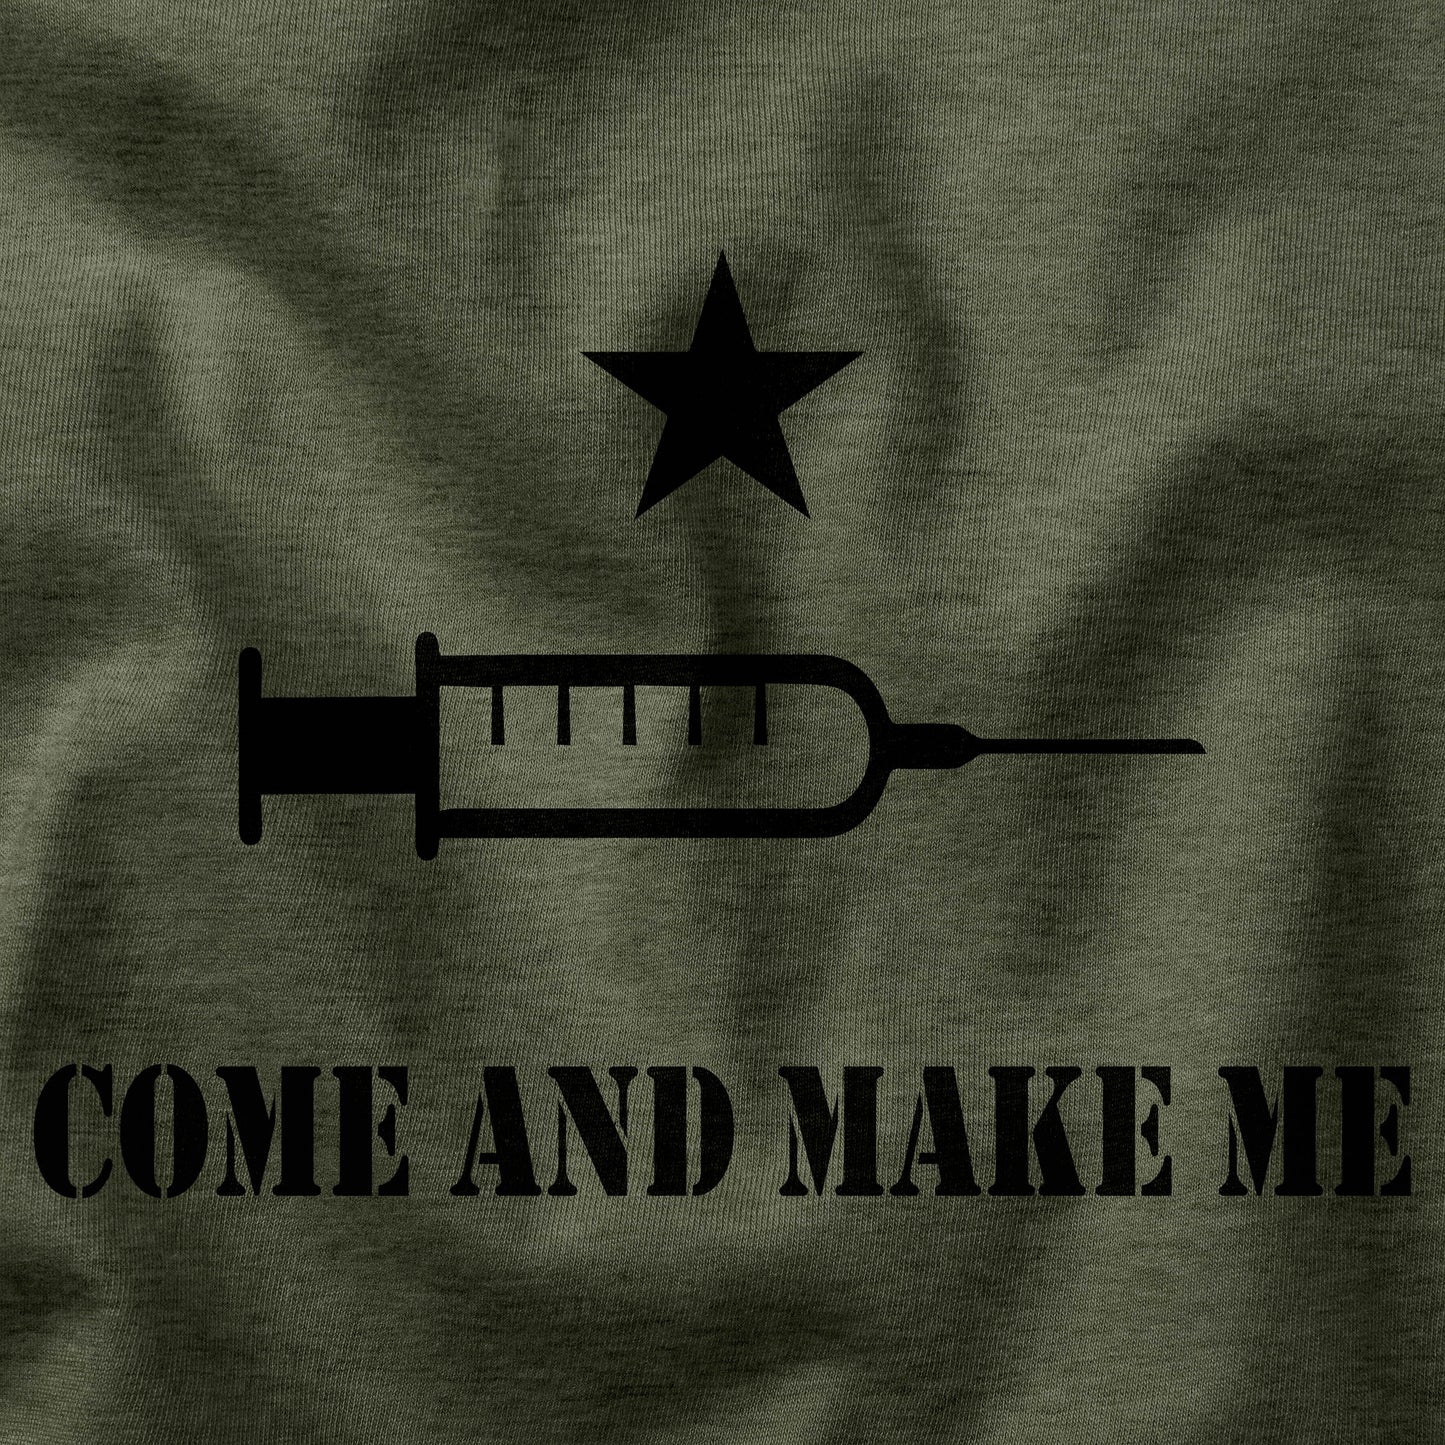 Anti vaccine t-shirt design closeup